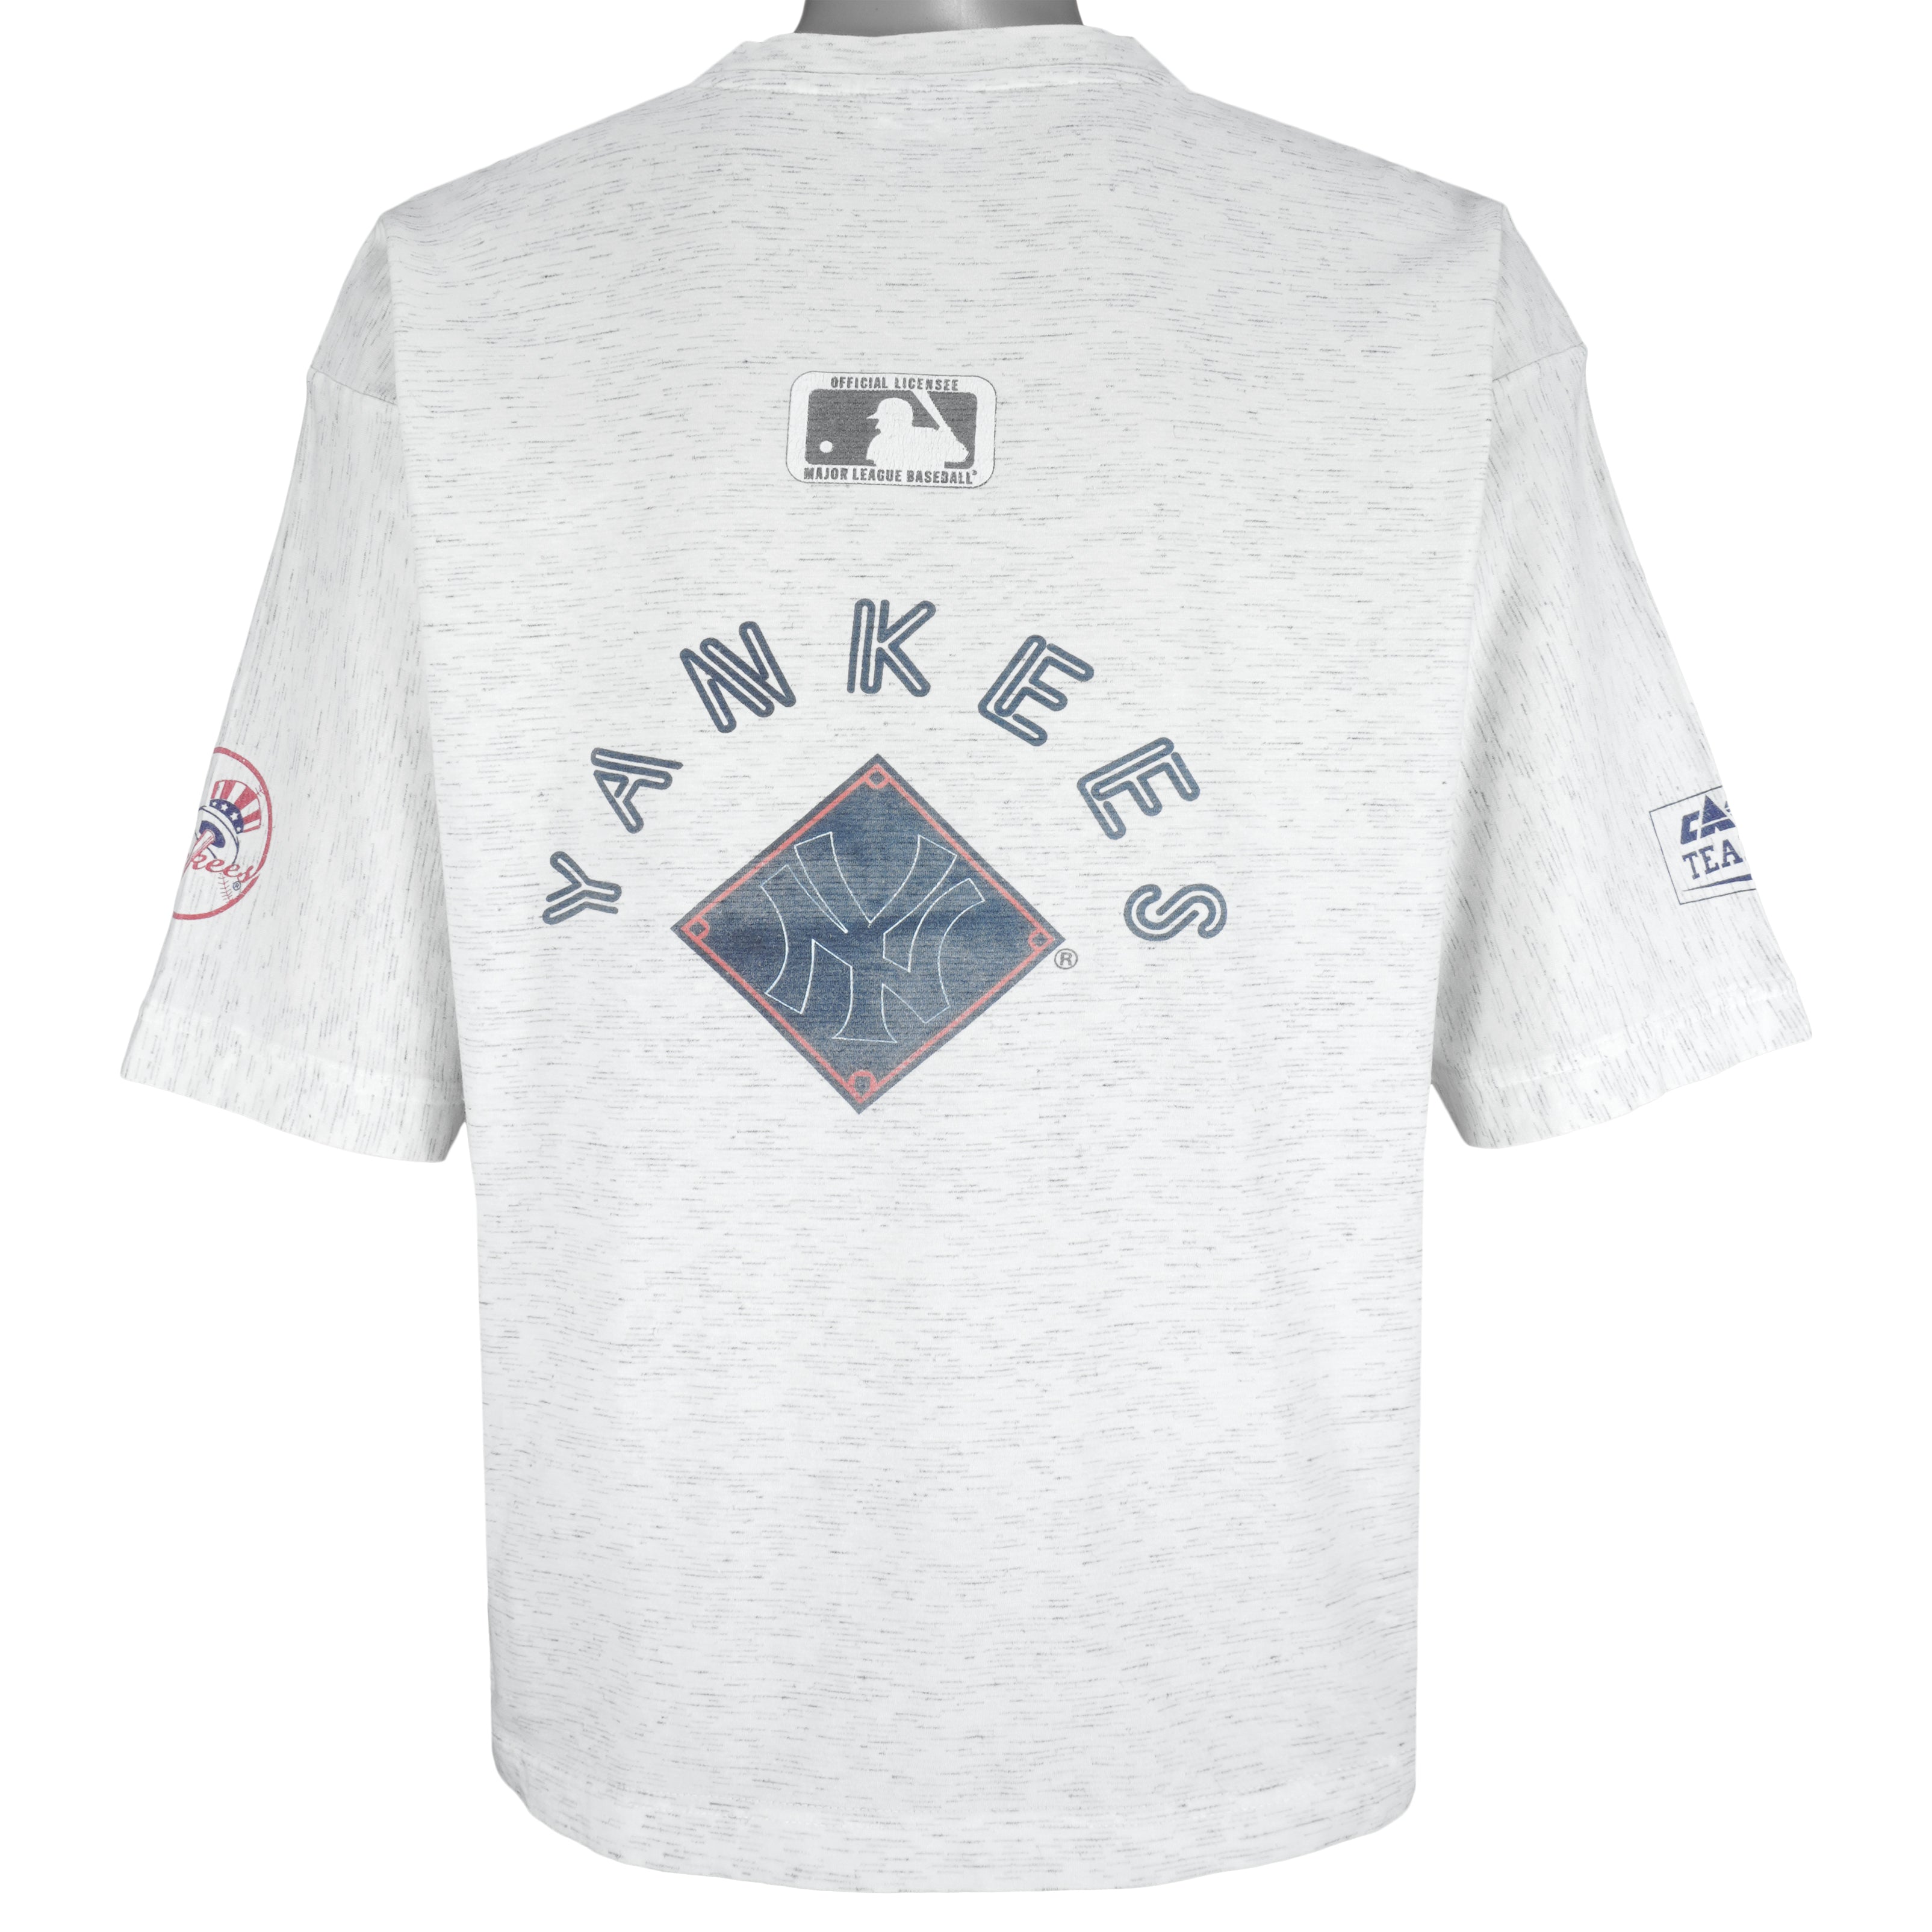 Vintage New York Yankees T Shirt Tee Nike Size Small S MLB 